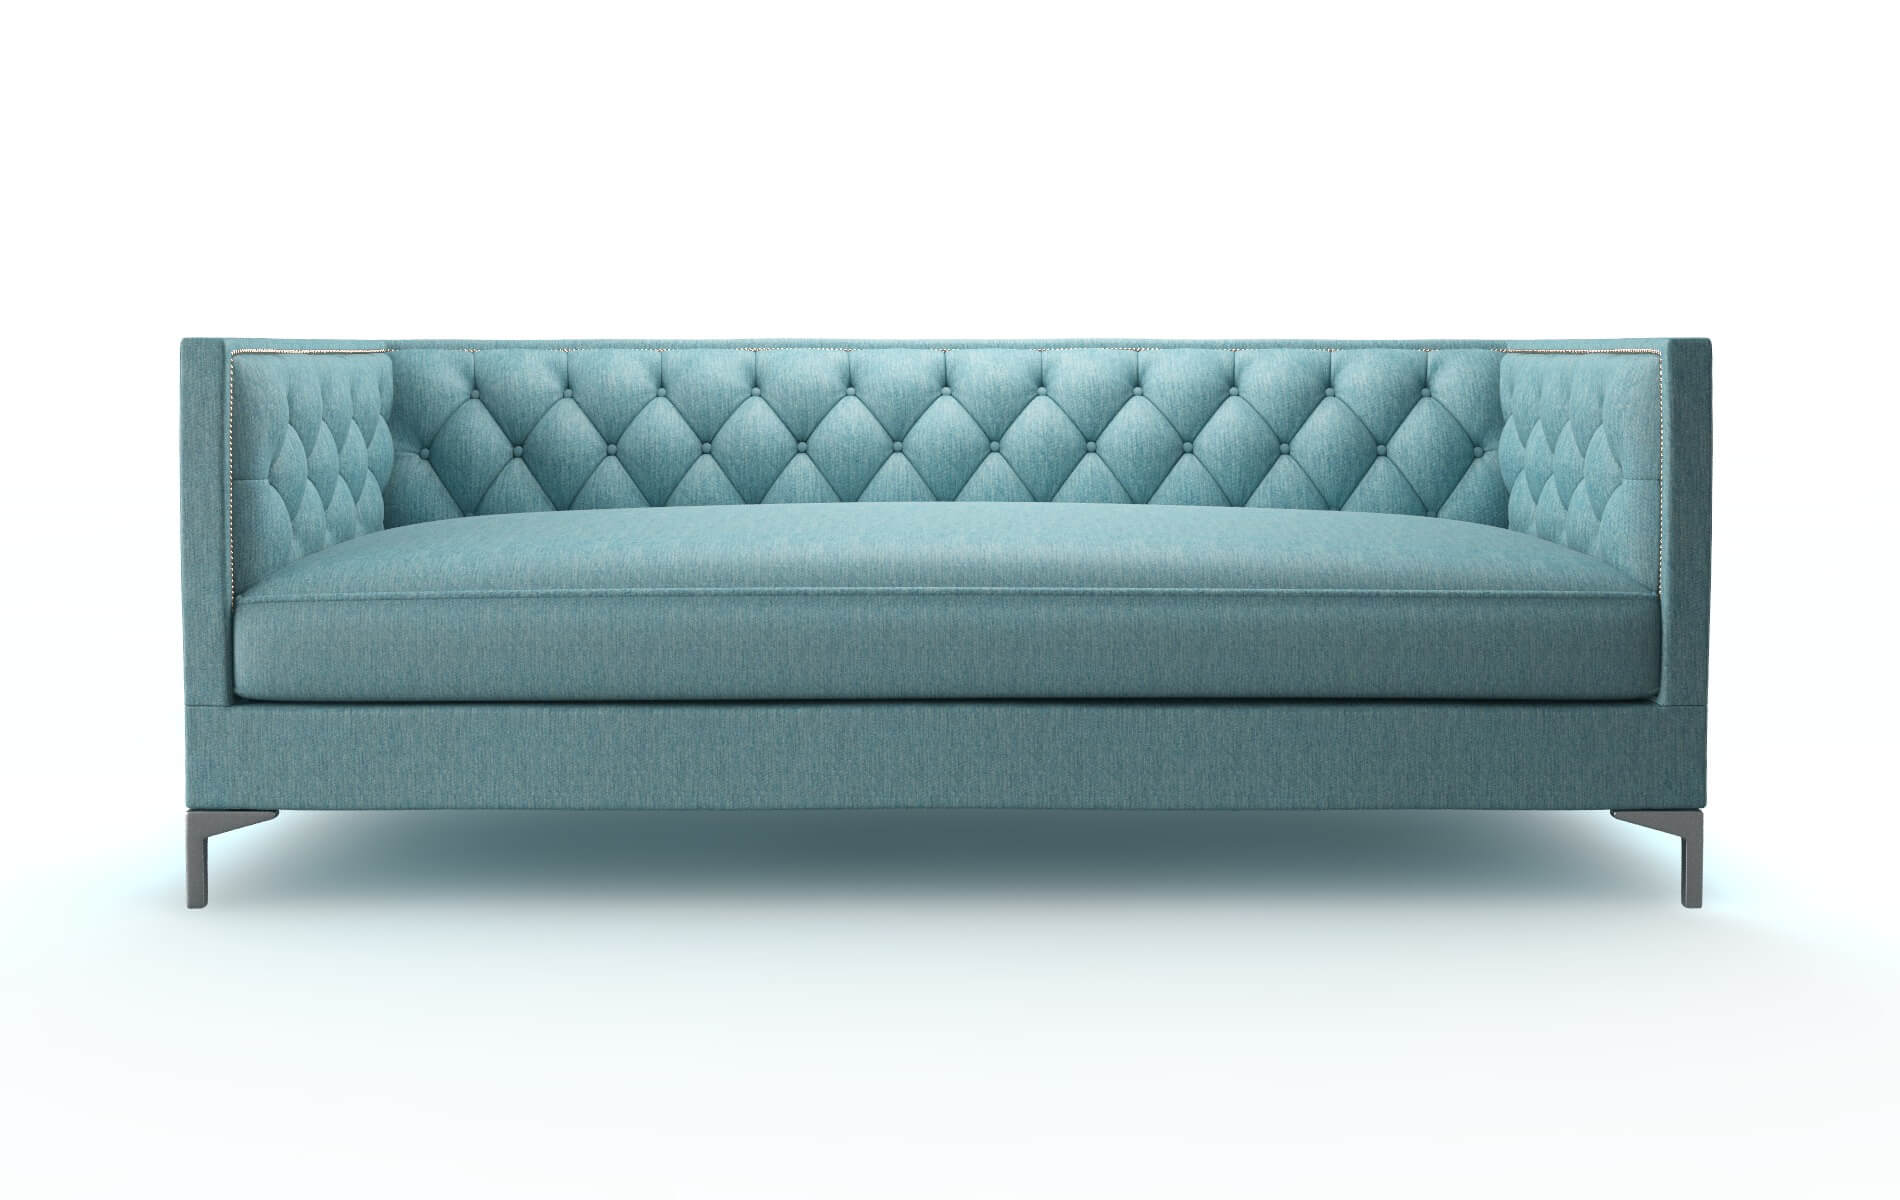 Gosford Cosmo Turquoise Sofa metal legs 1